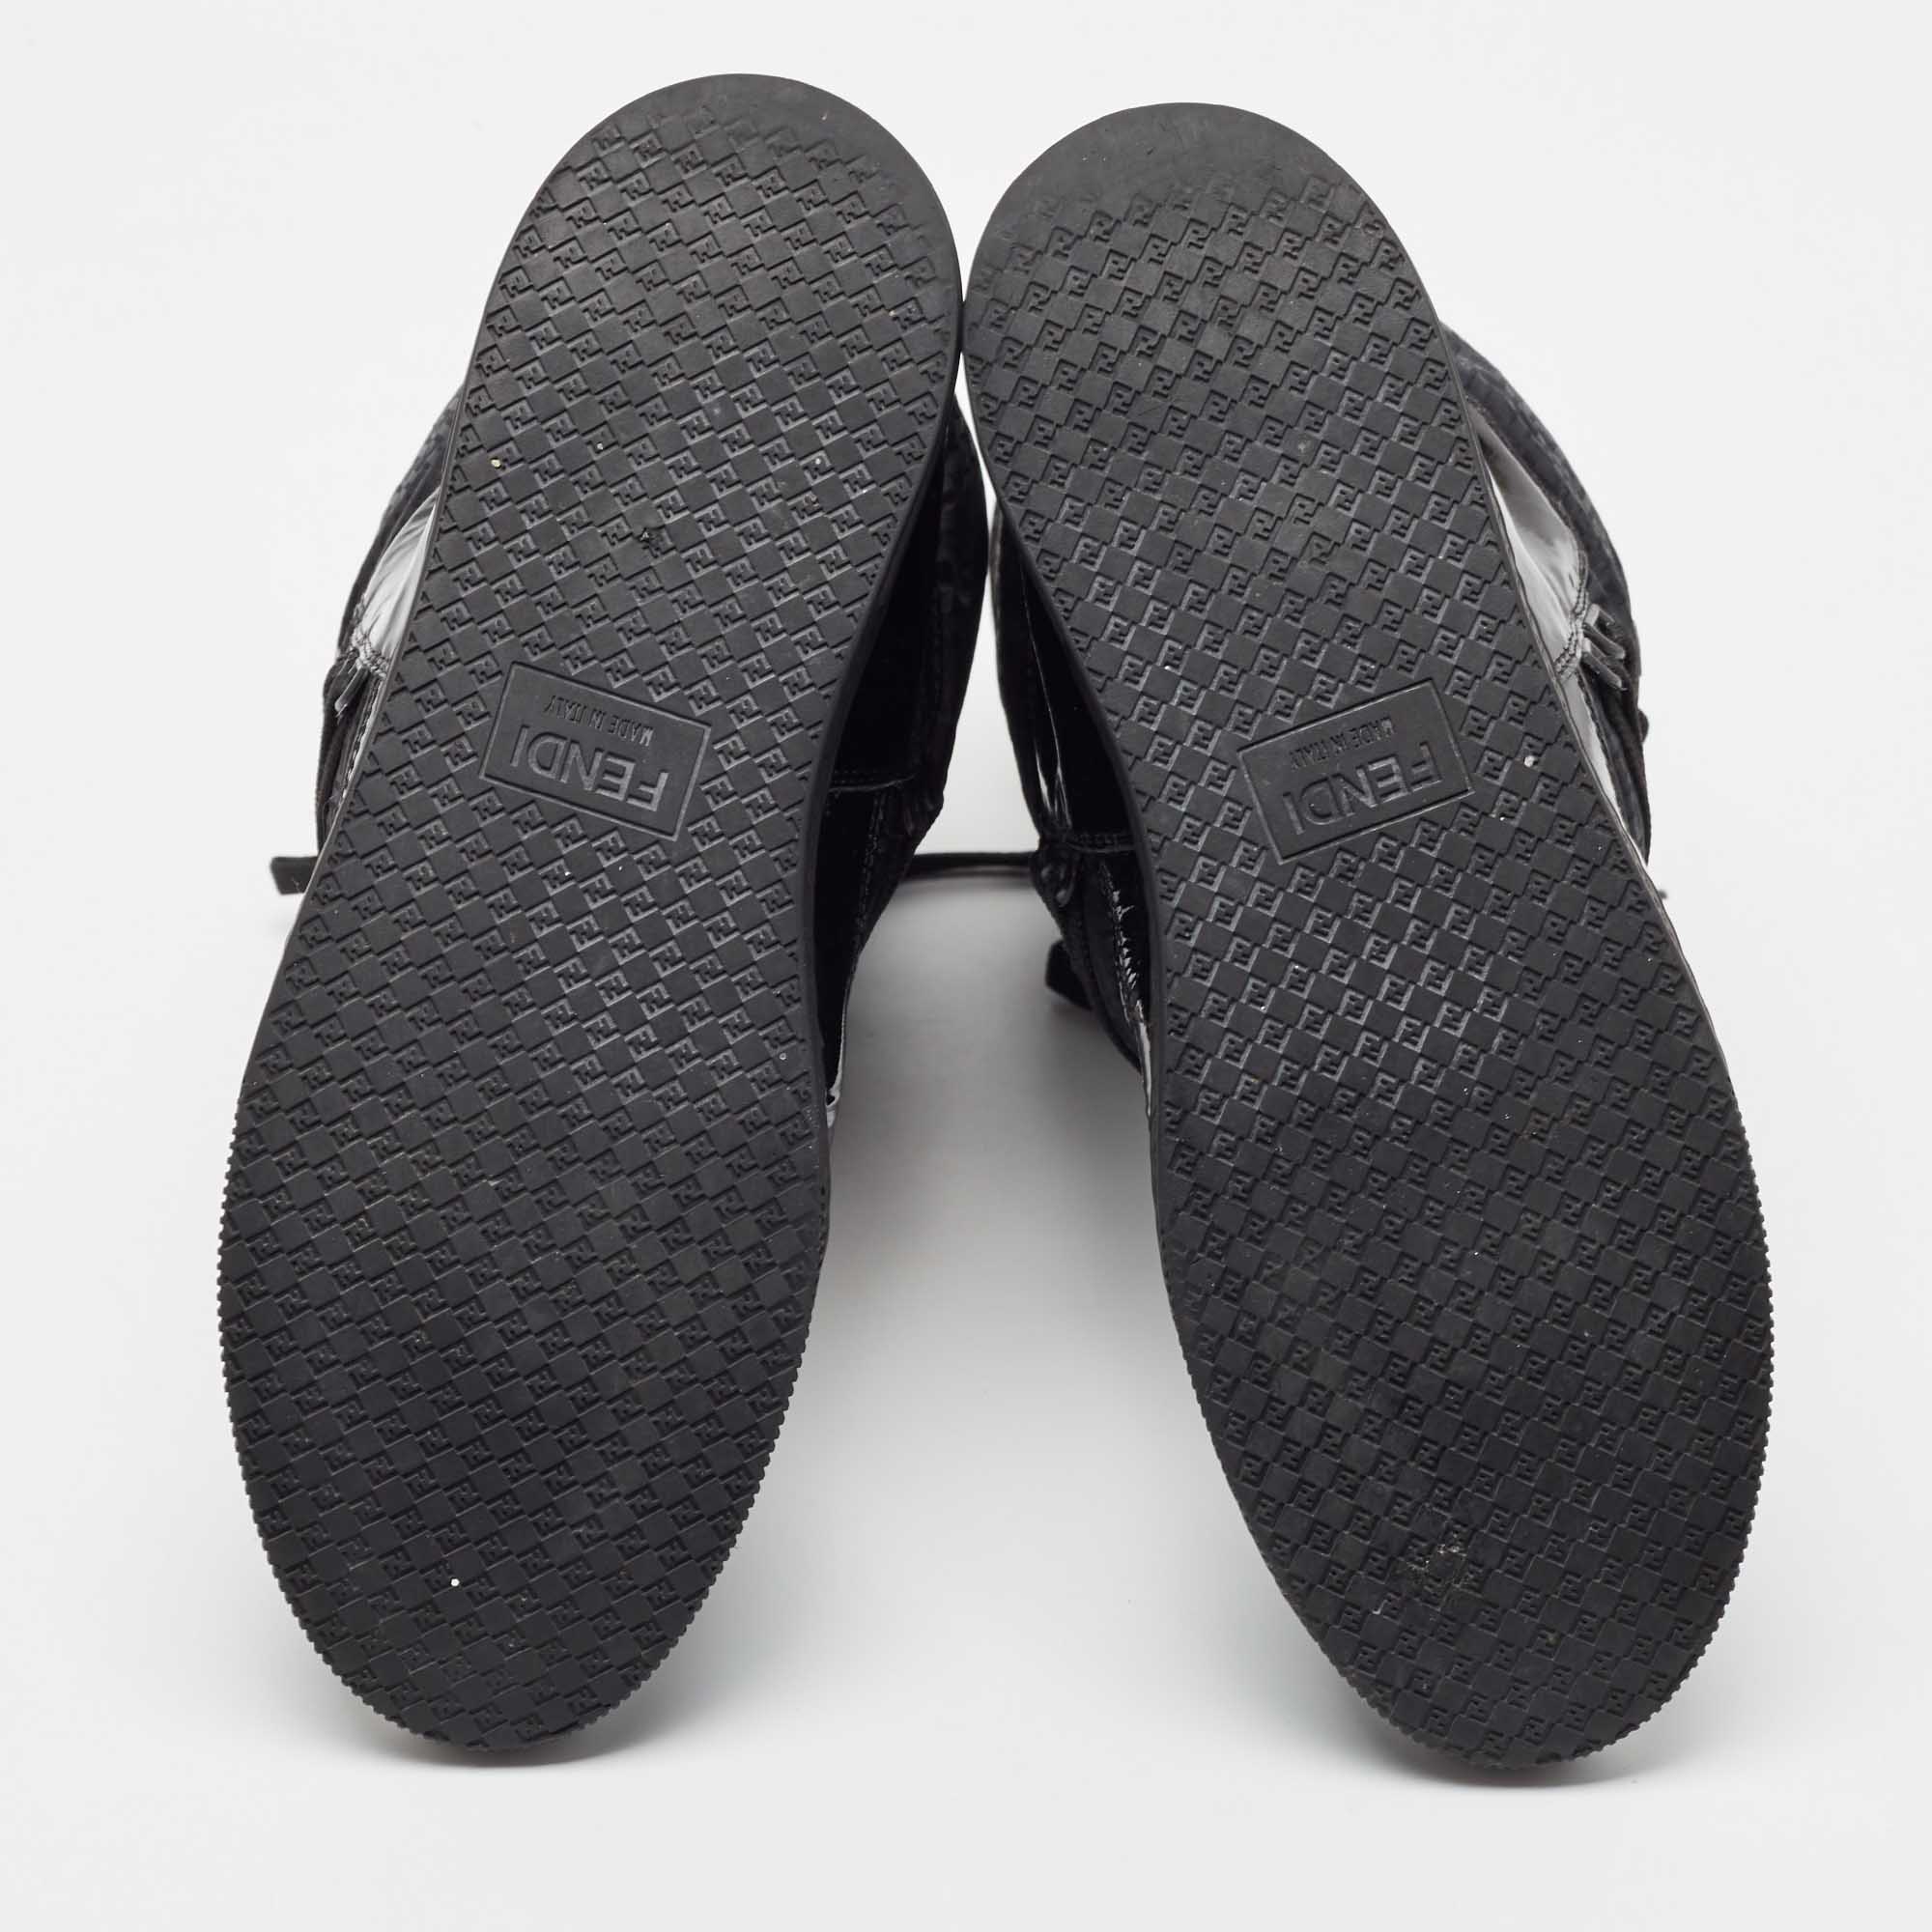 Fendi Black Nylon And Patent Midcalf Boots Size 38.5